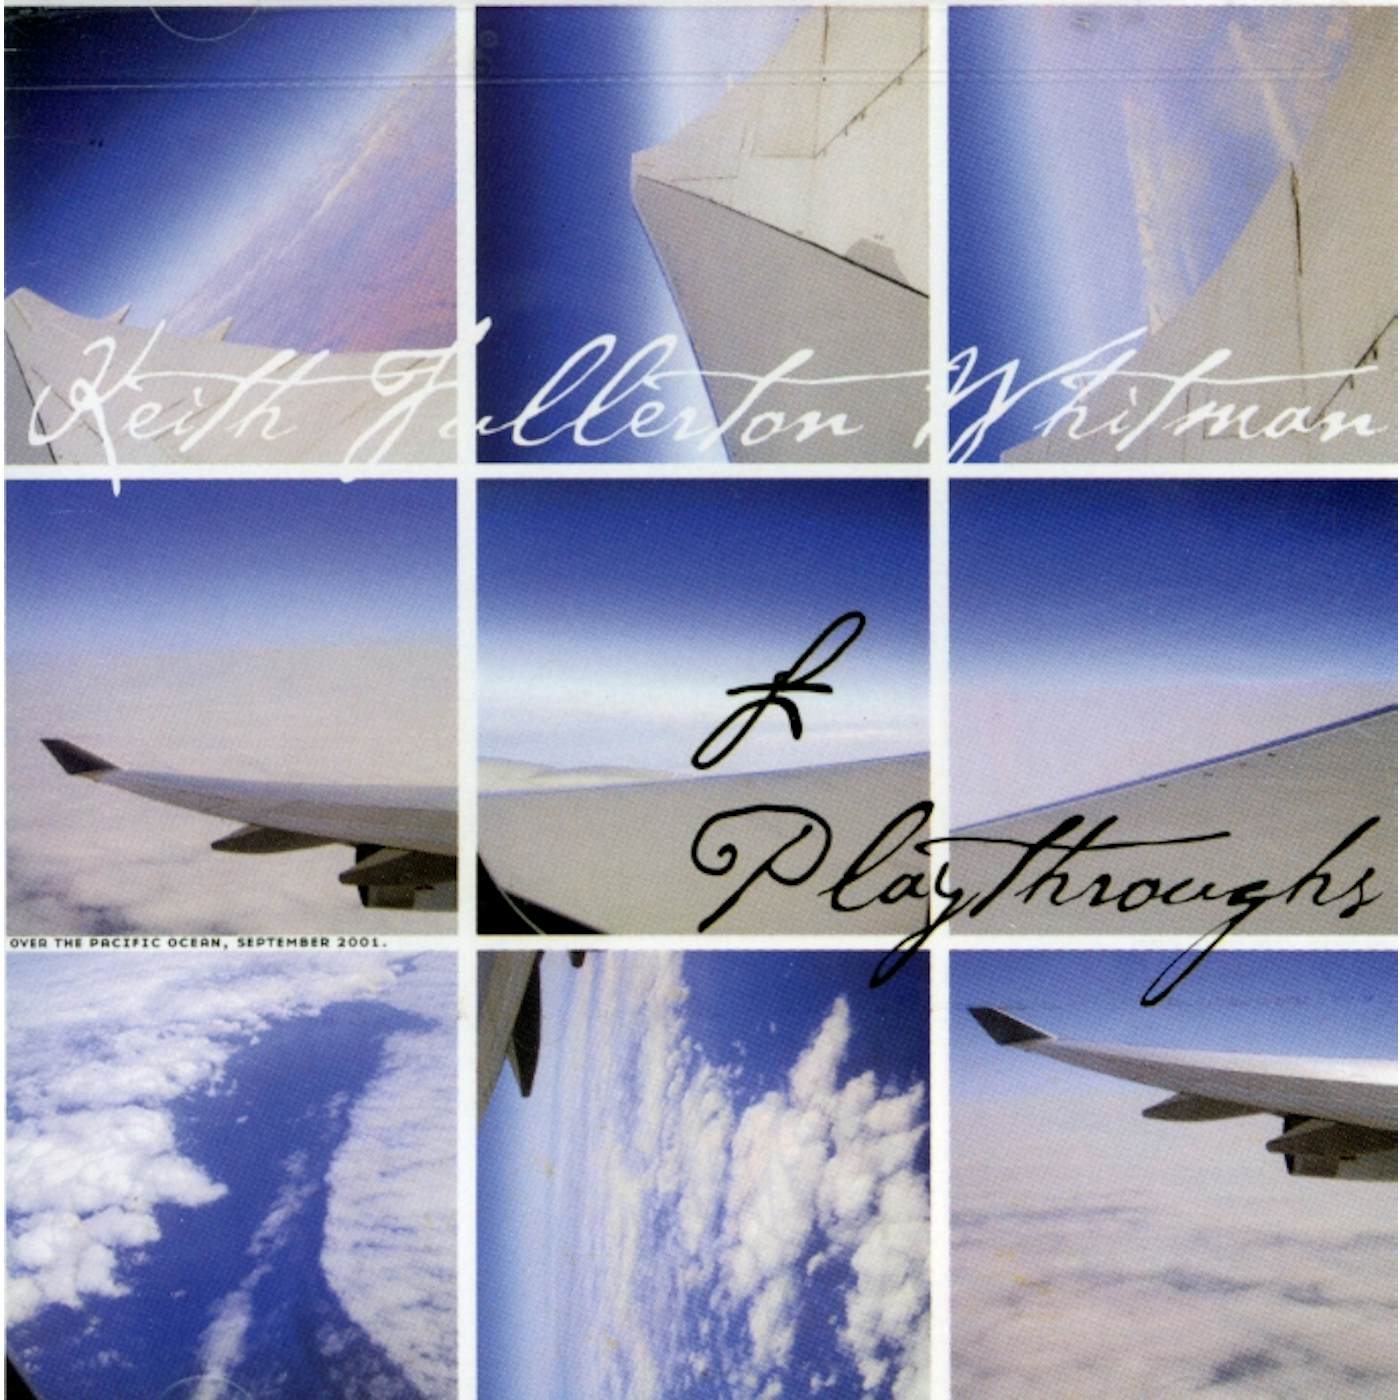 Keith Fullerton Whitman PLAYTHROUGHS CD